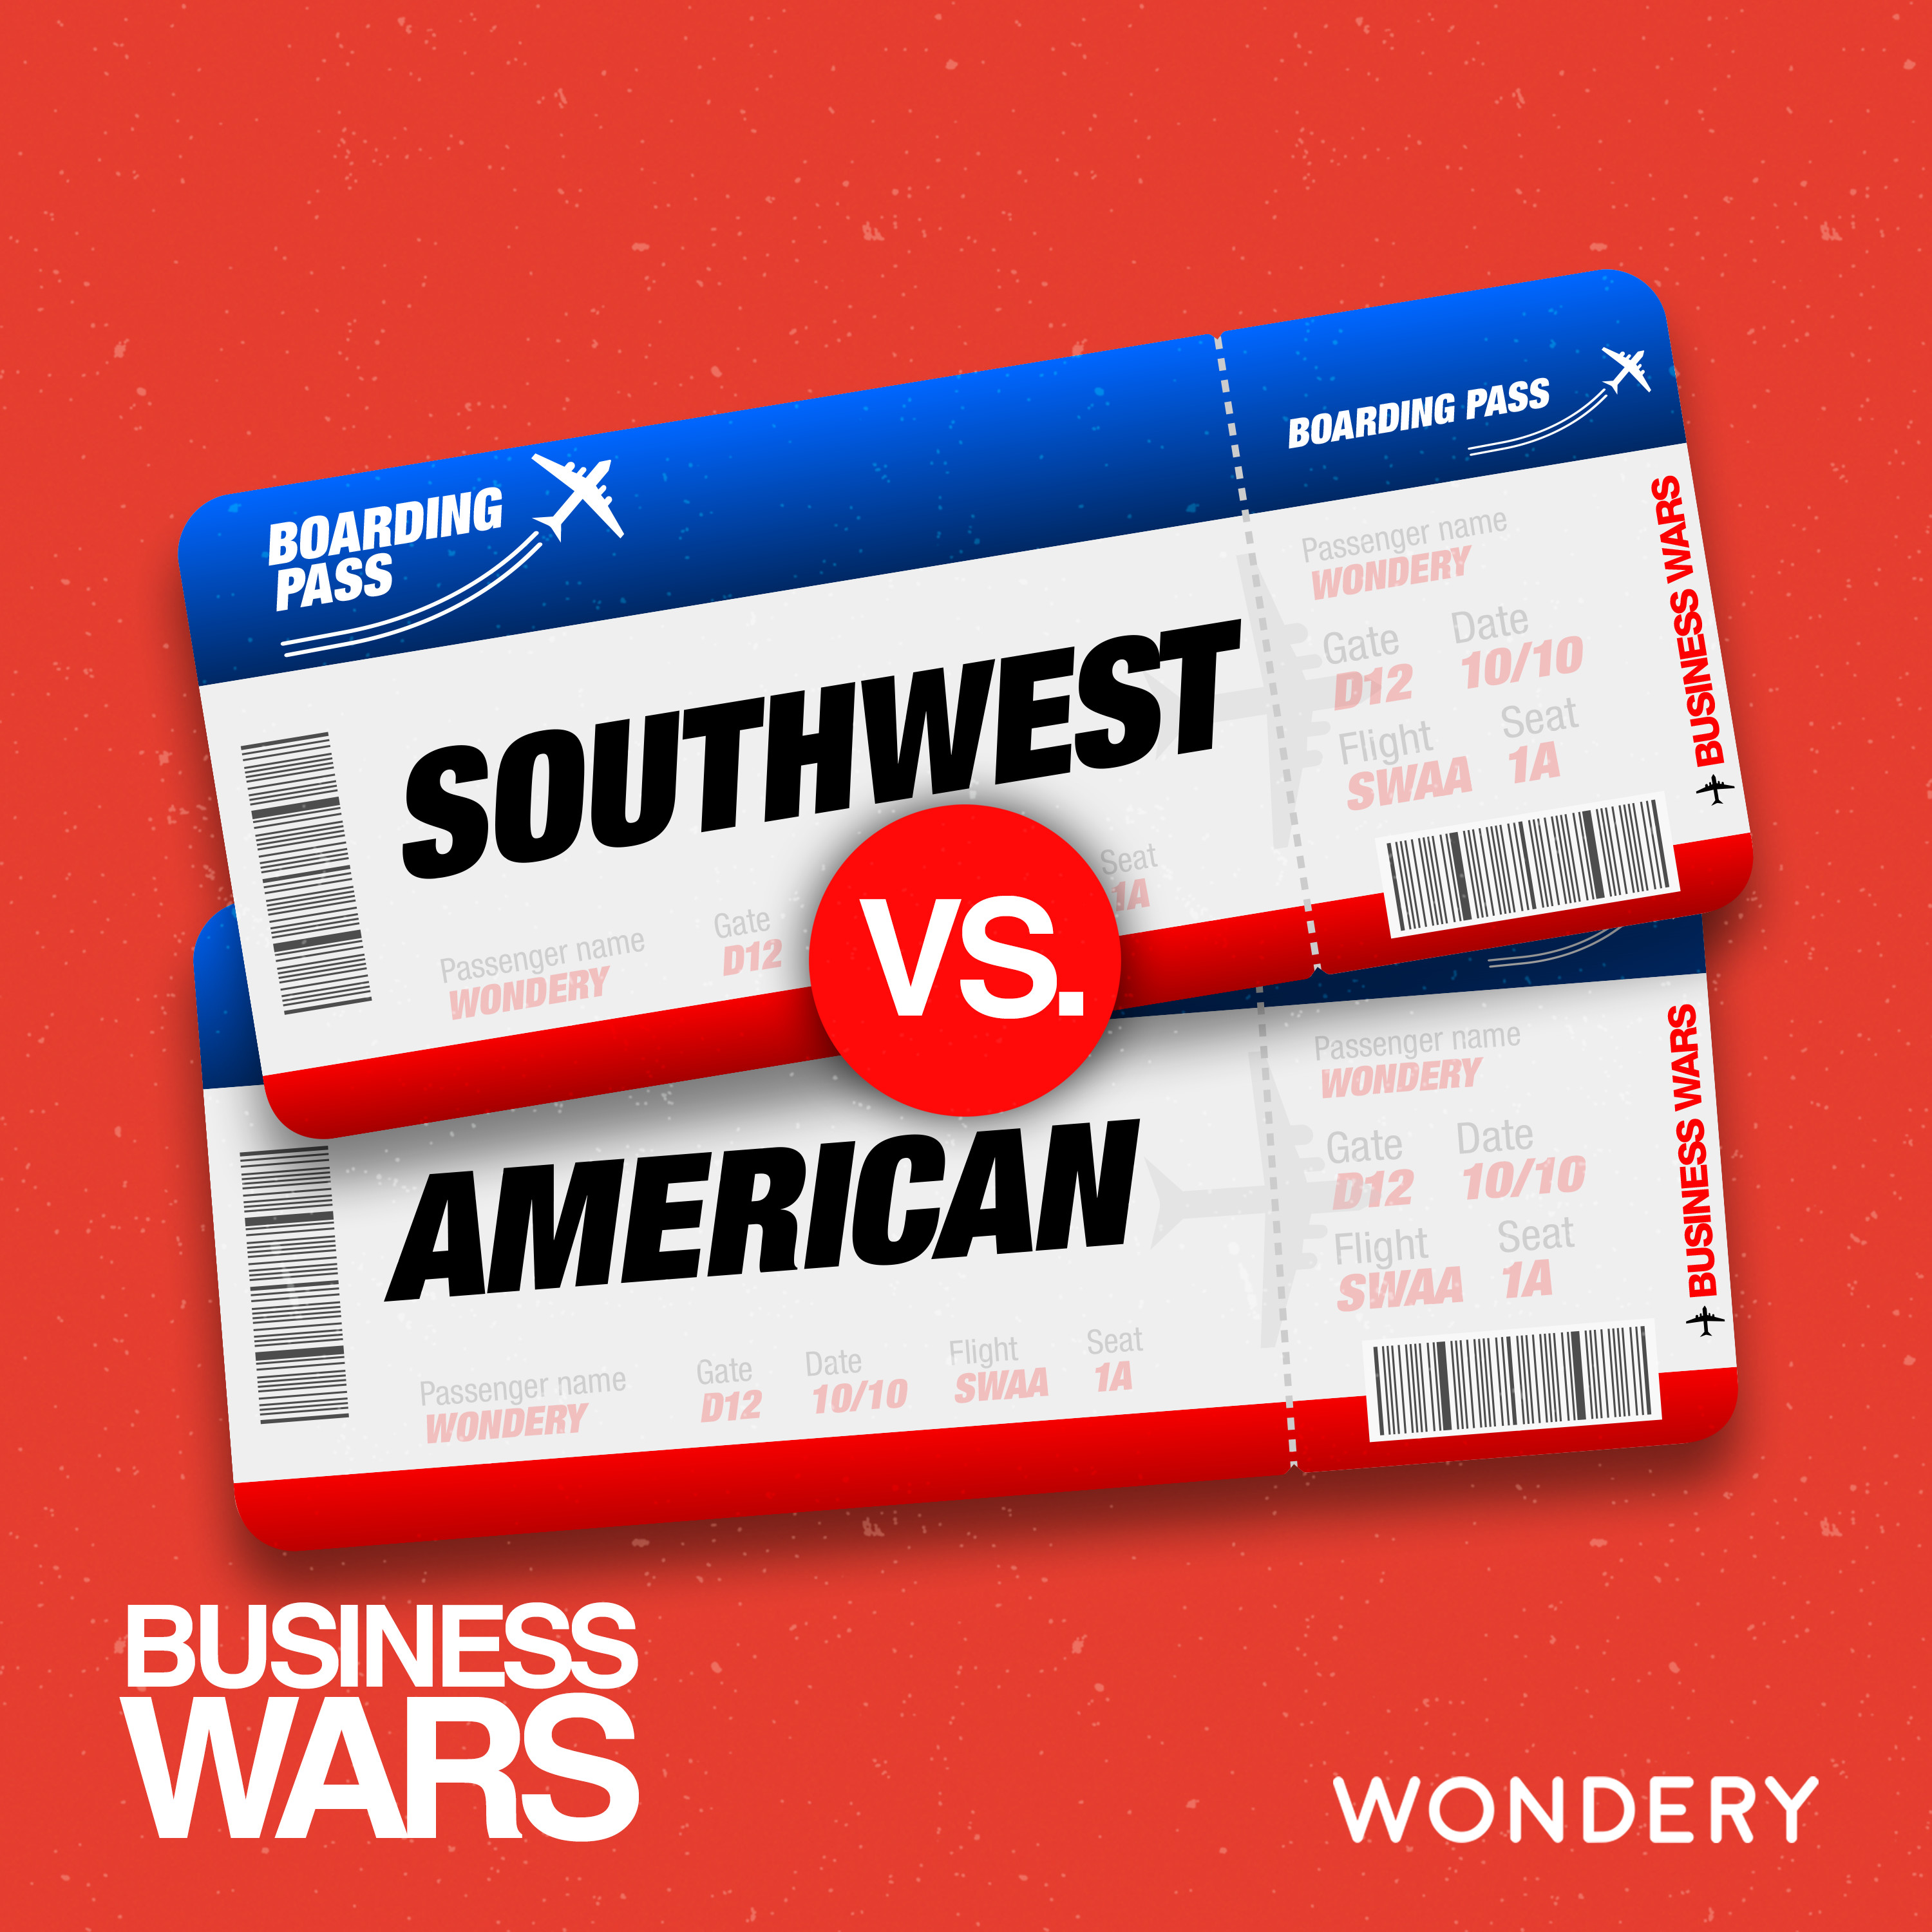 Southwest vs American - The Darling of Deregulation | 4